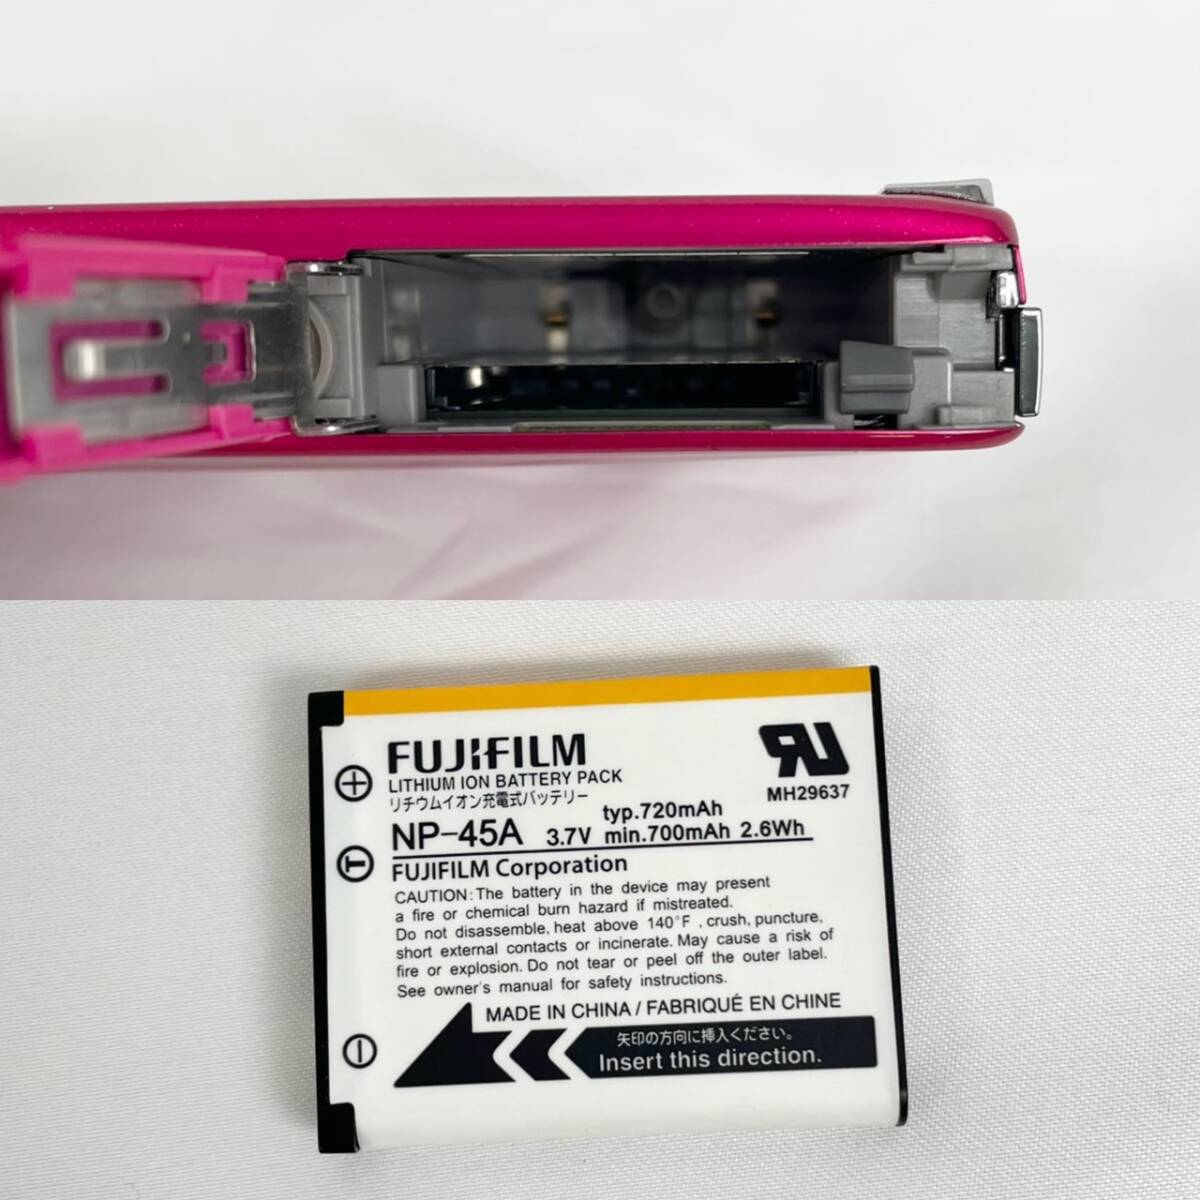 FUJIFILM fine Pix Z900EXR デジタルカメラ ピンク 光学機器 デジカメ コンパクトカメラ カメラ 富士フィルム ファインピクス 33j-4-3の画像10